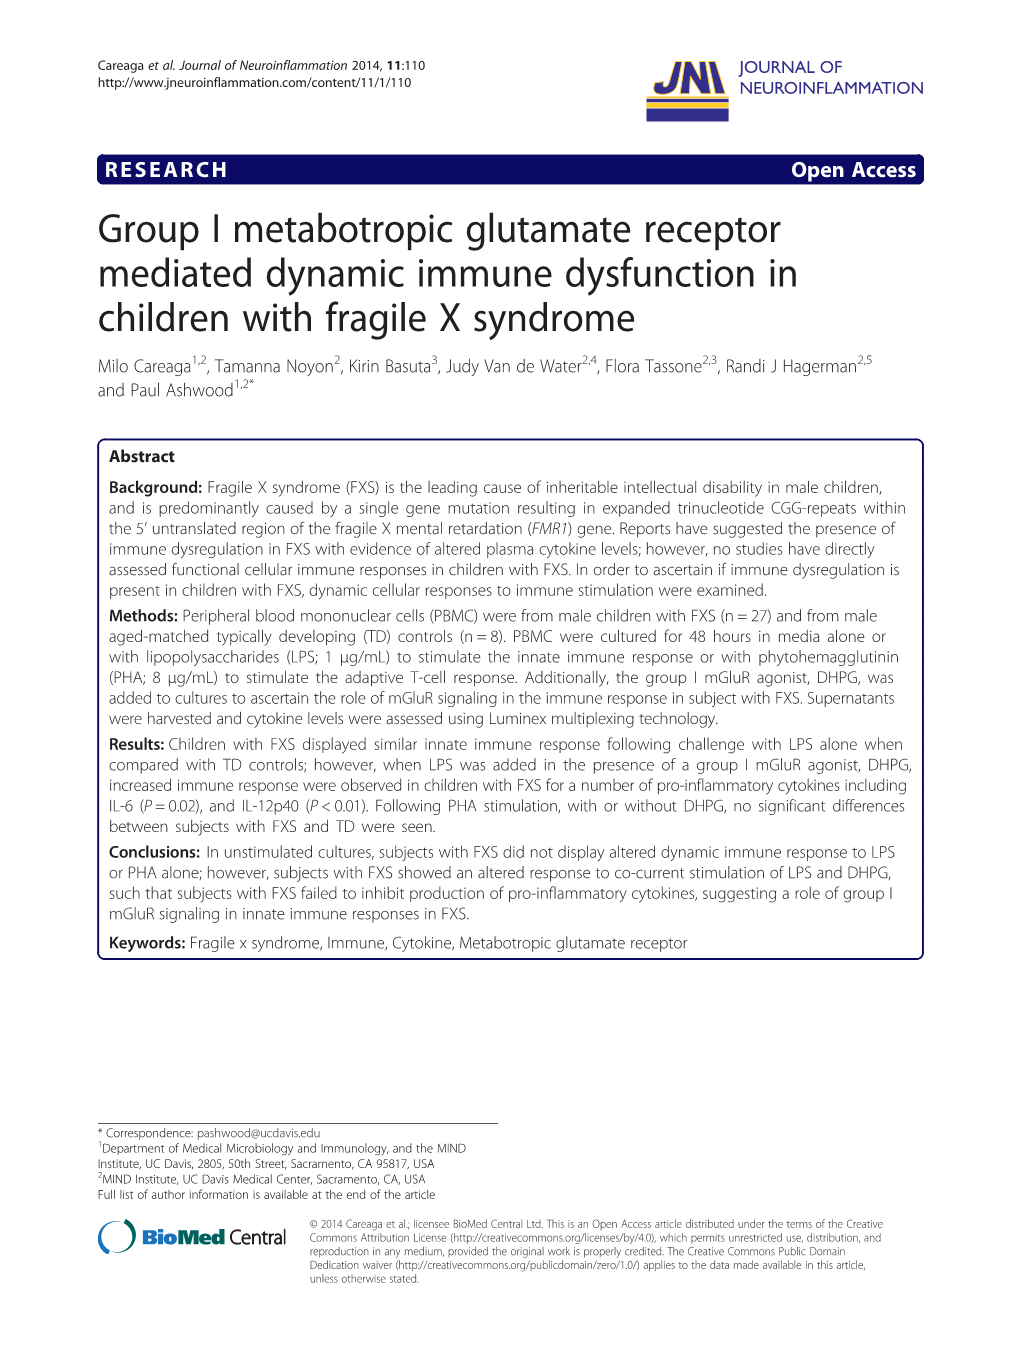 Group I Metabotropic Glutamate Receptor Mediated Dynamic Immune